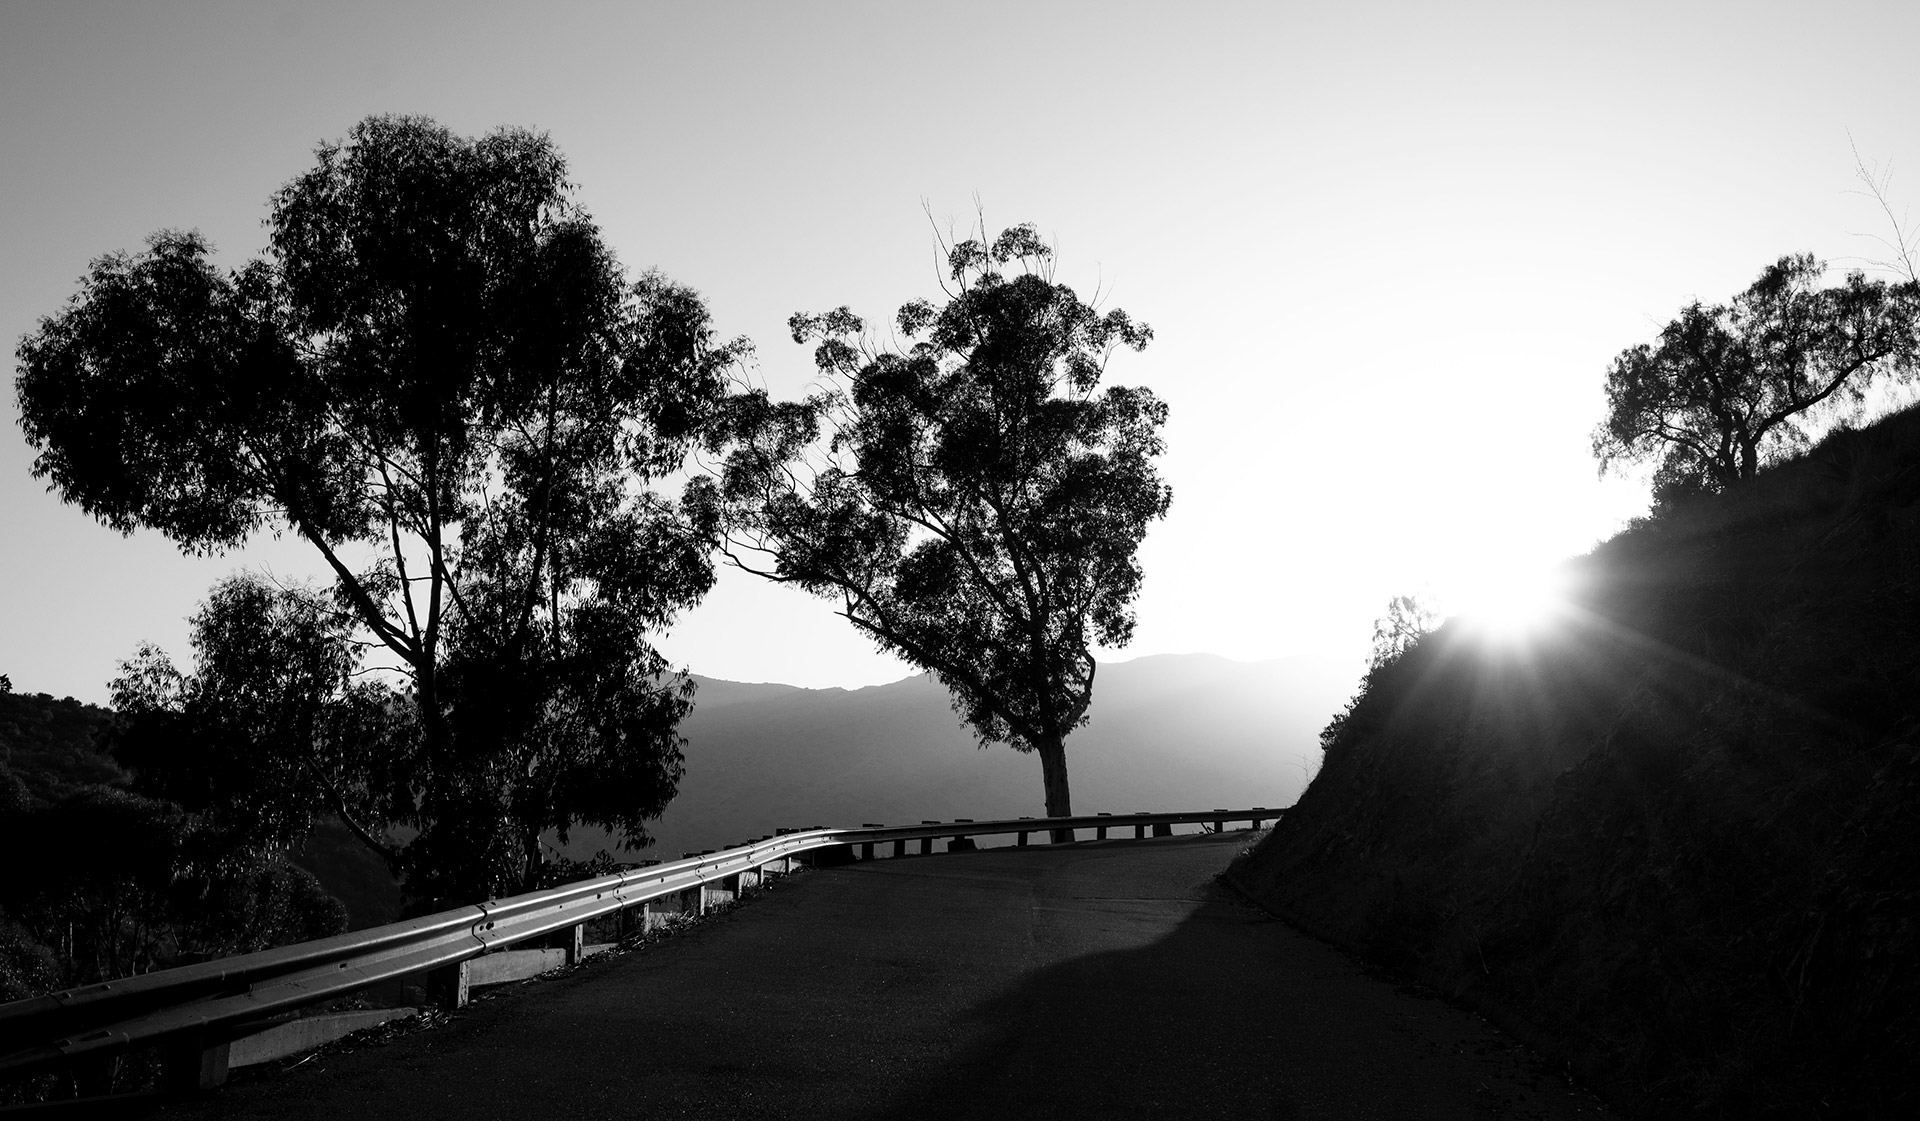 Walking up Wrigley road, Avalon, Catalina Island ©2021